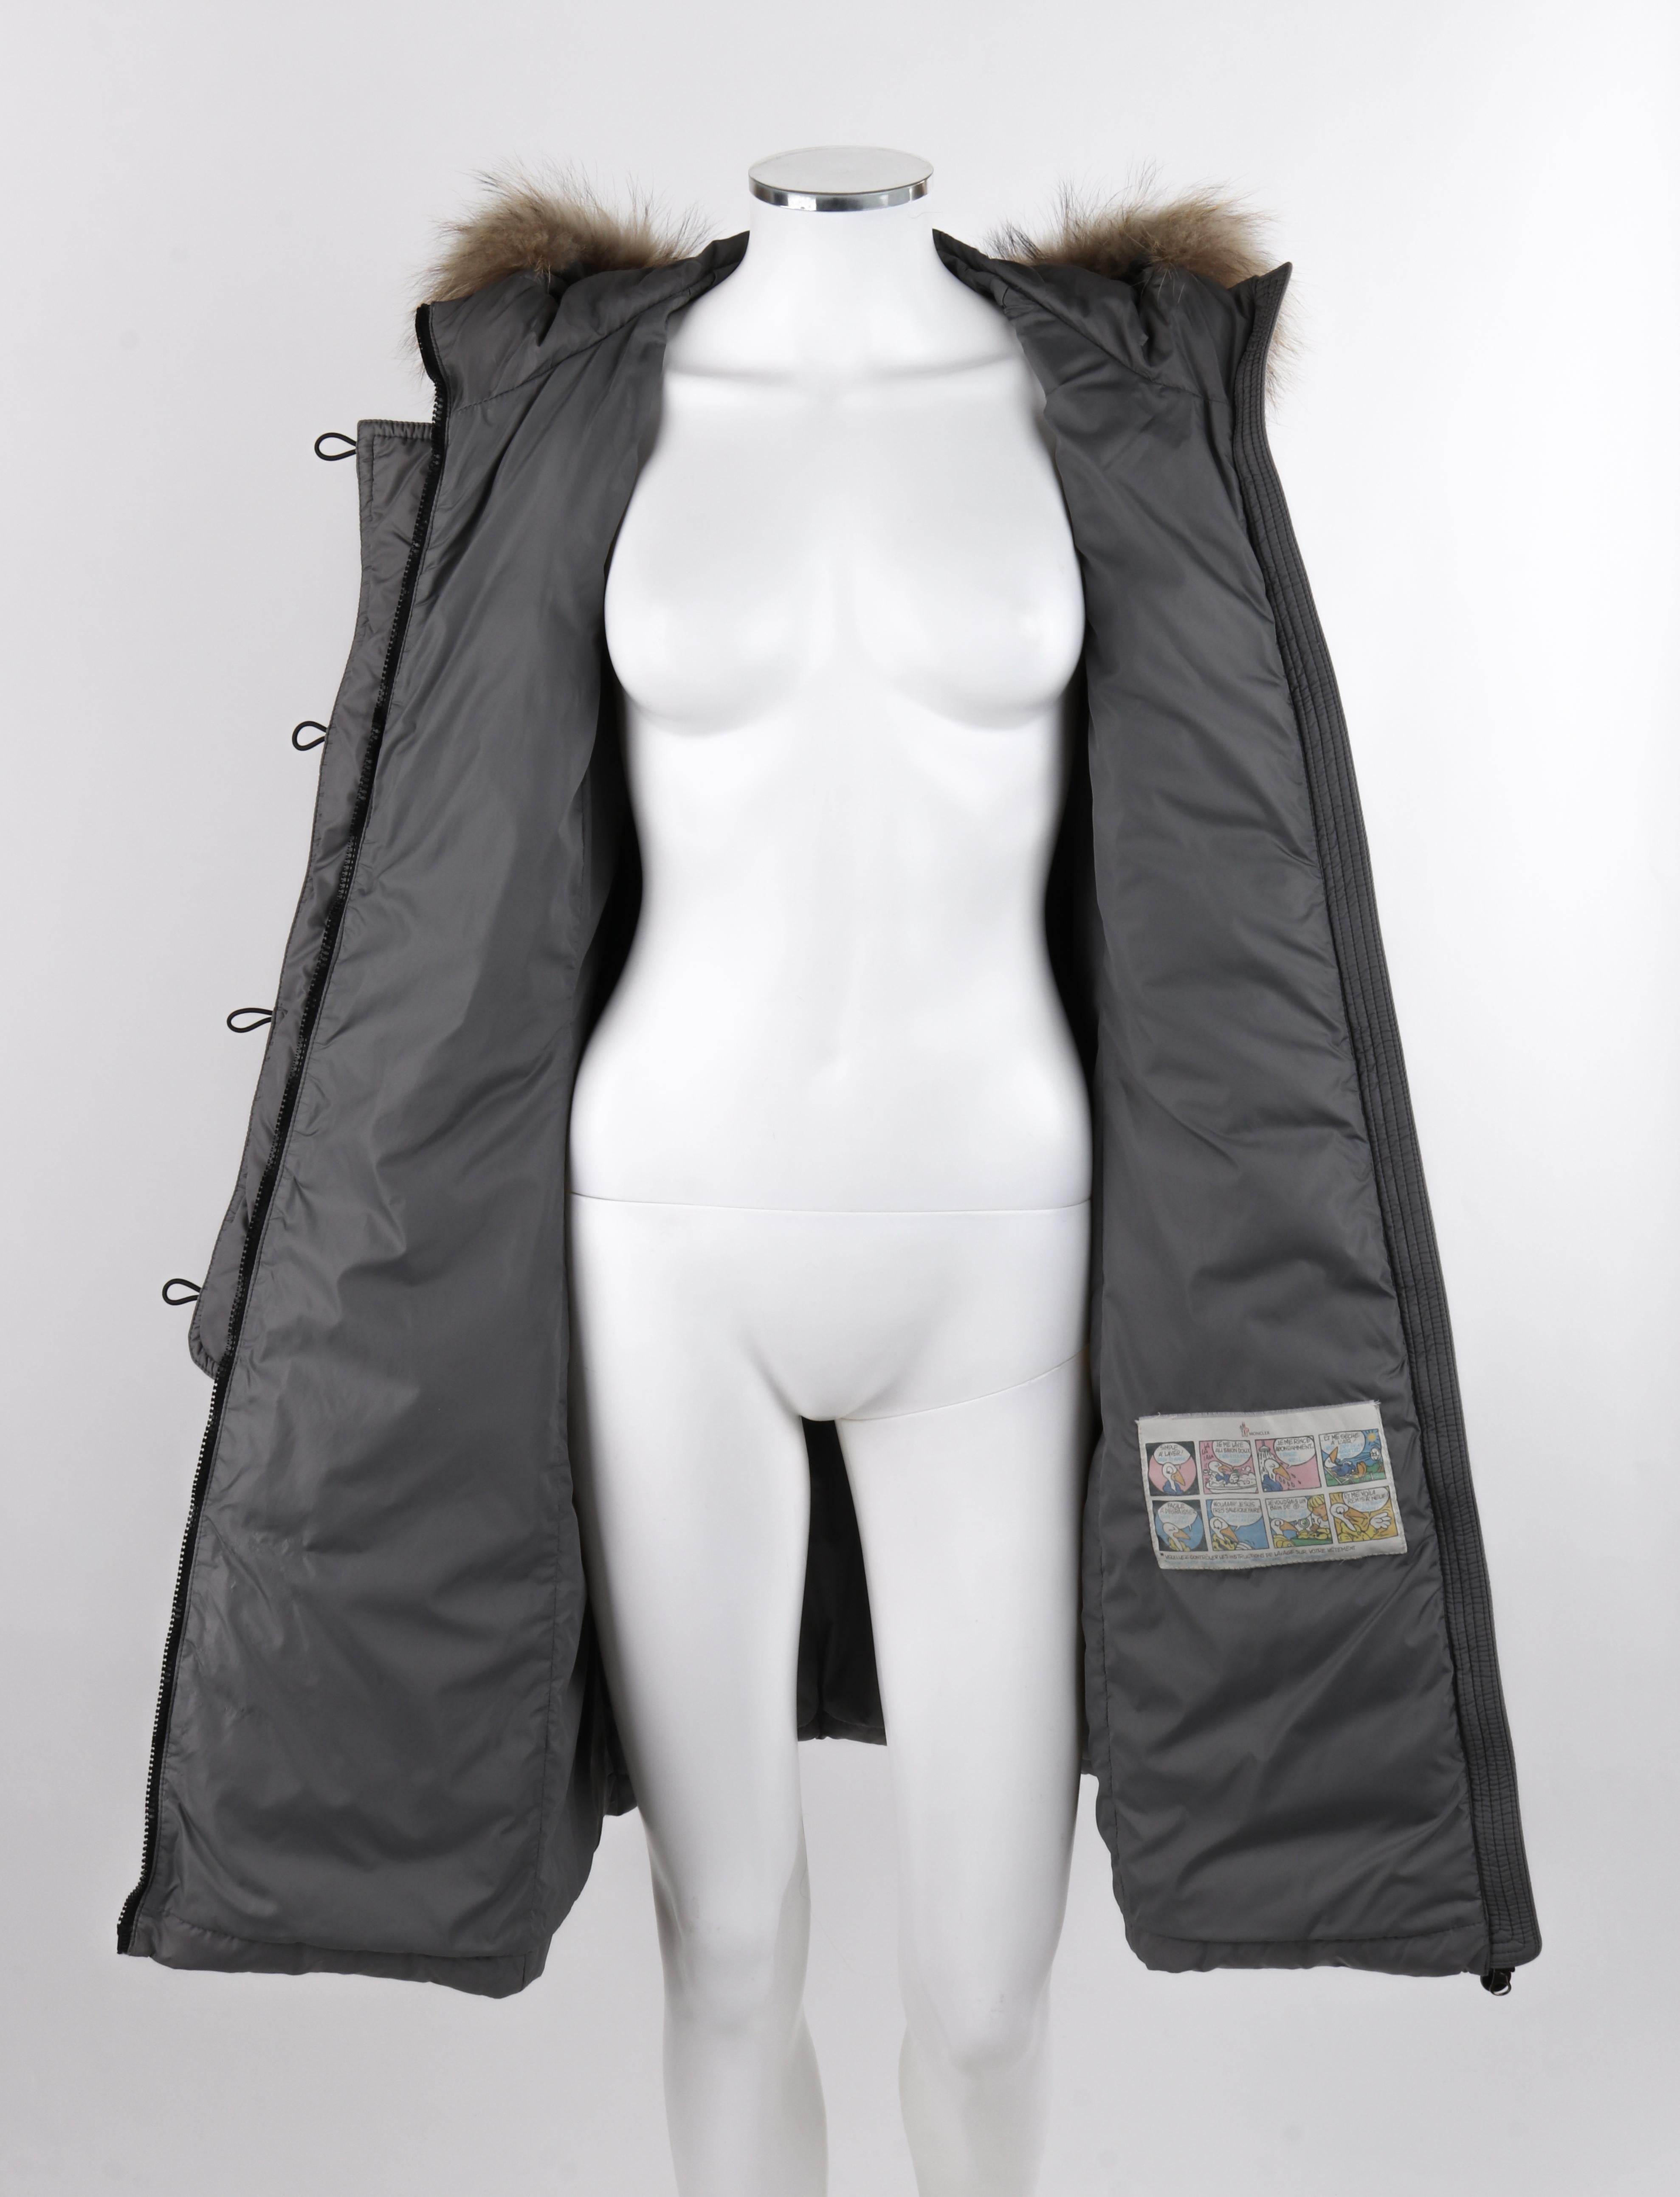 Women's MONCLER “Genevrier” Giubbotto Gray Fur Quilted Puffer Jacket Parka Coat Size 